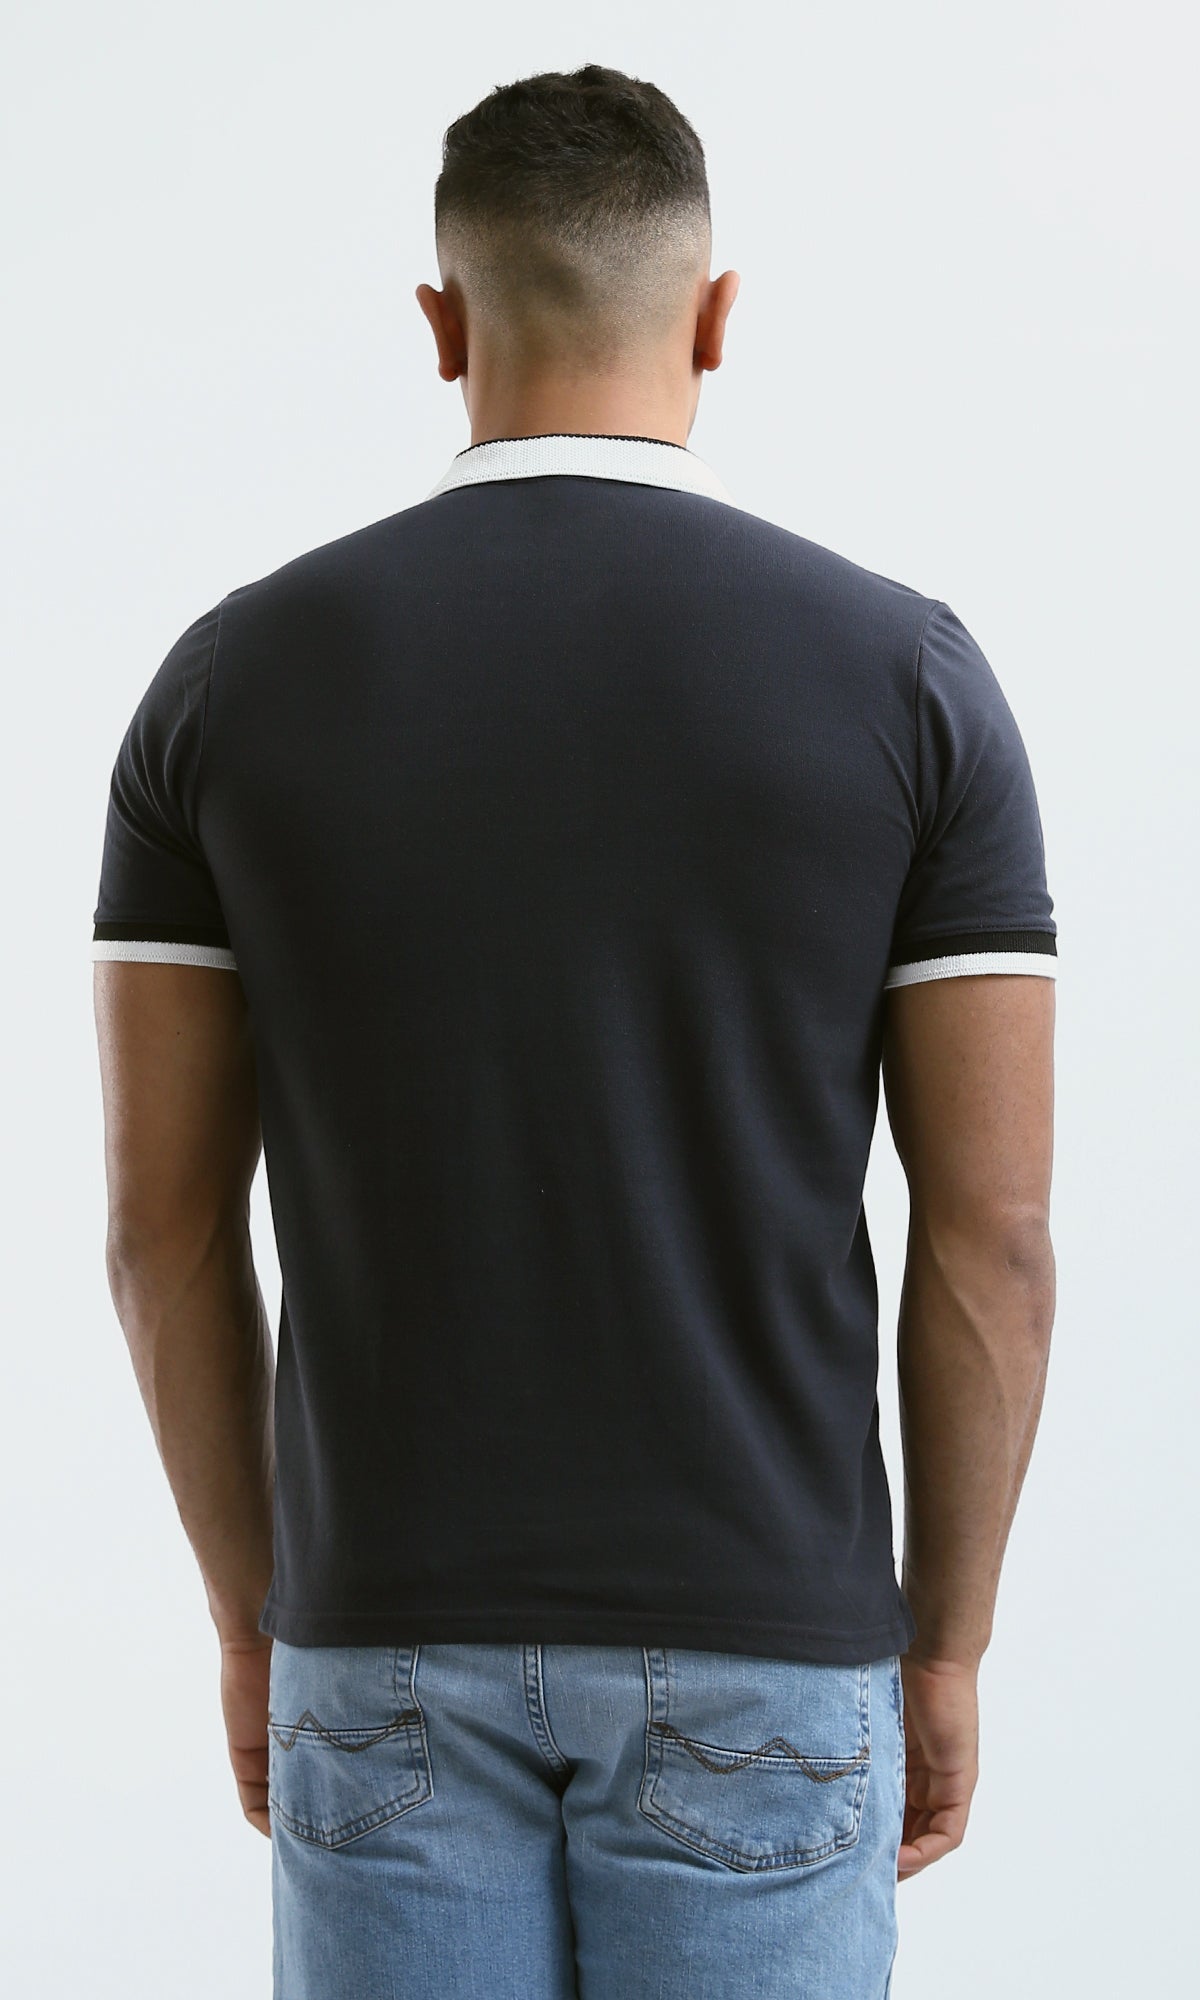 O180818 Short Sleeves Elegant Dark Grey Polo Shirt